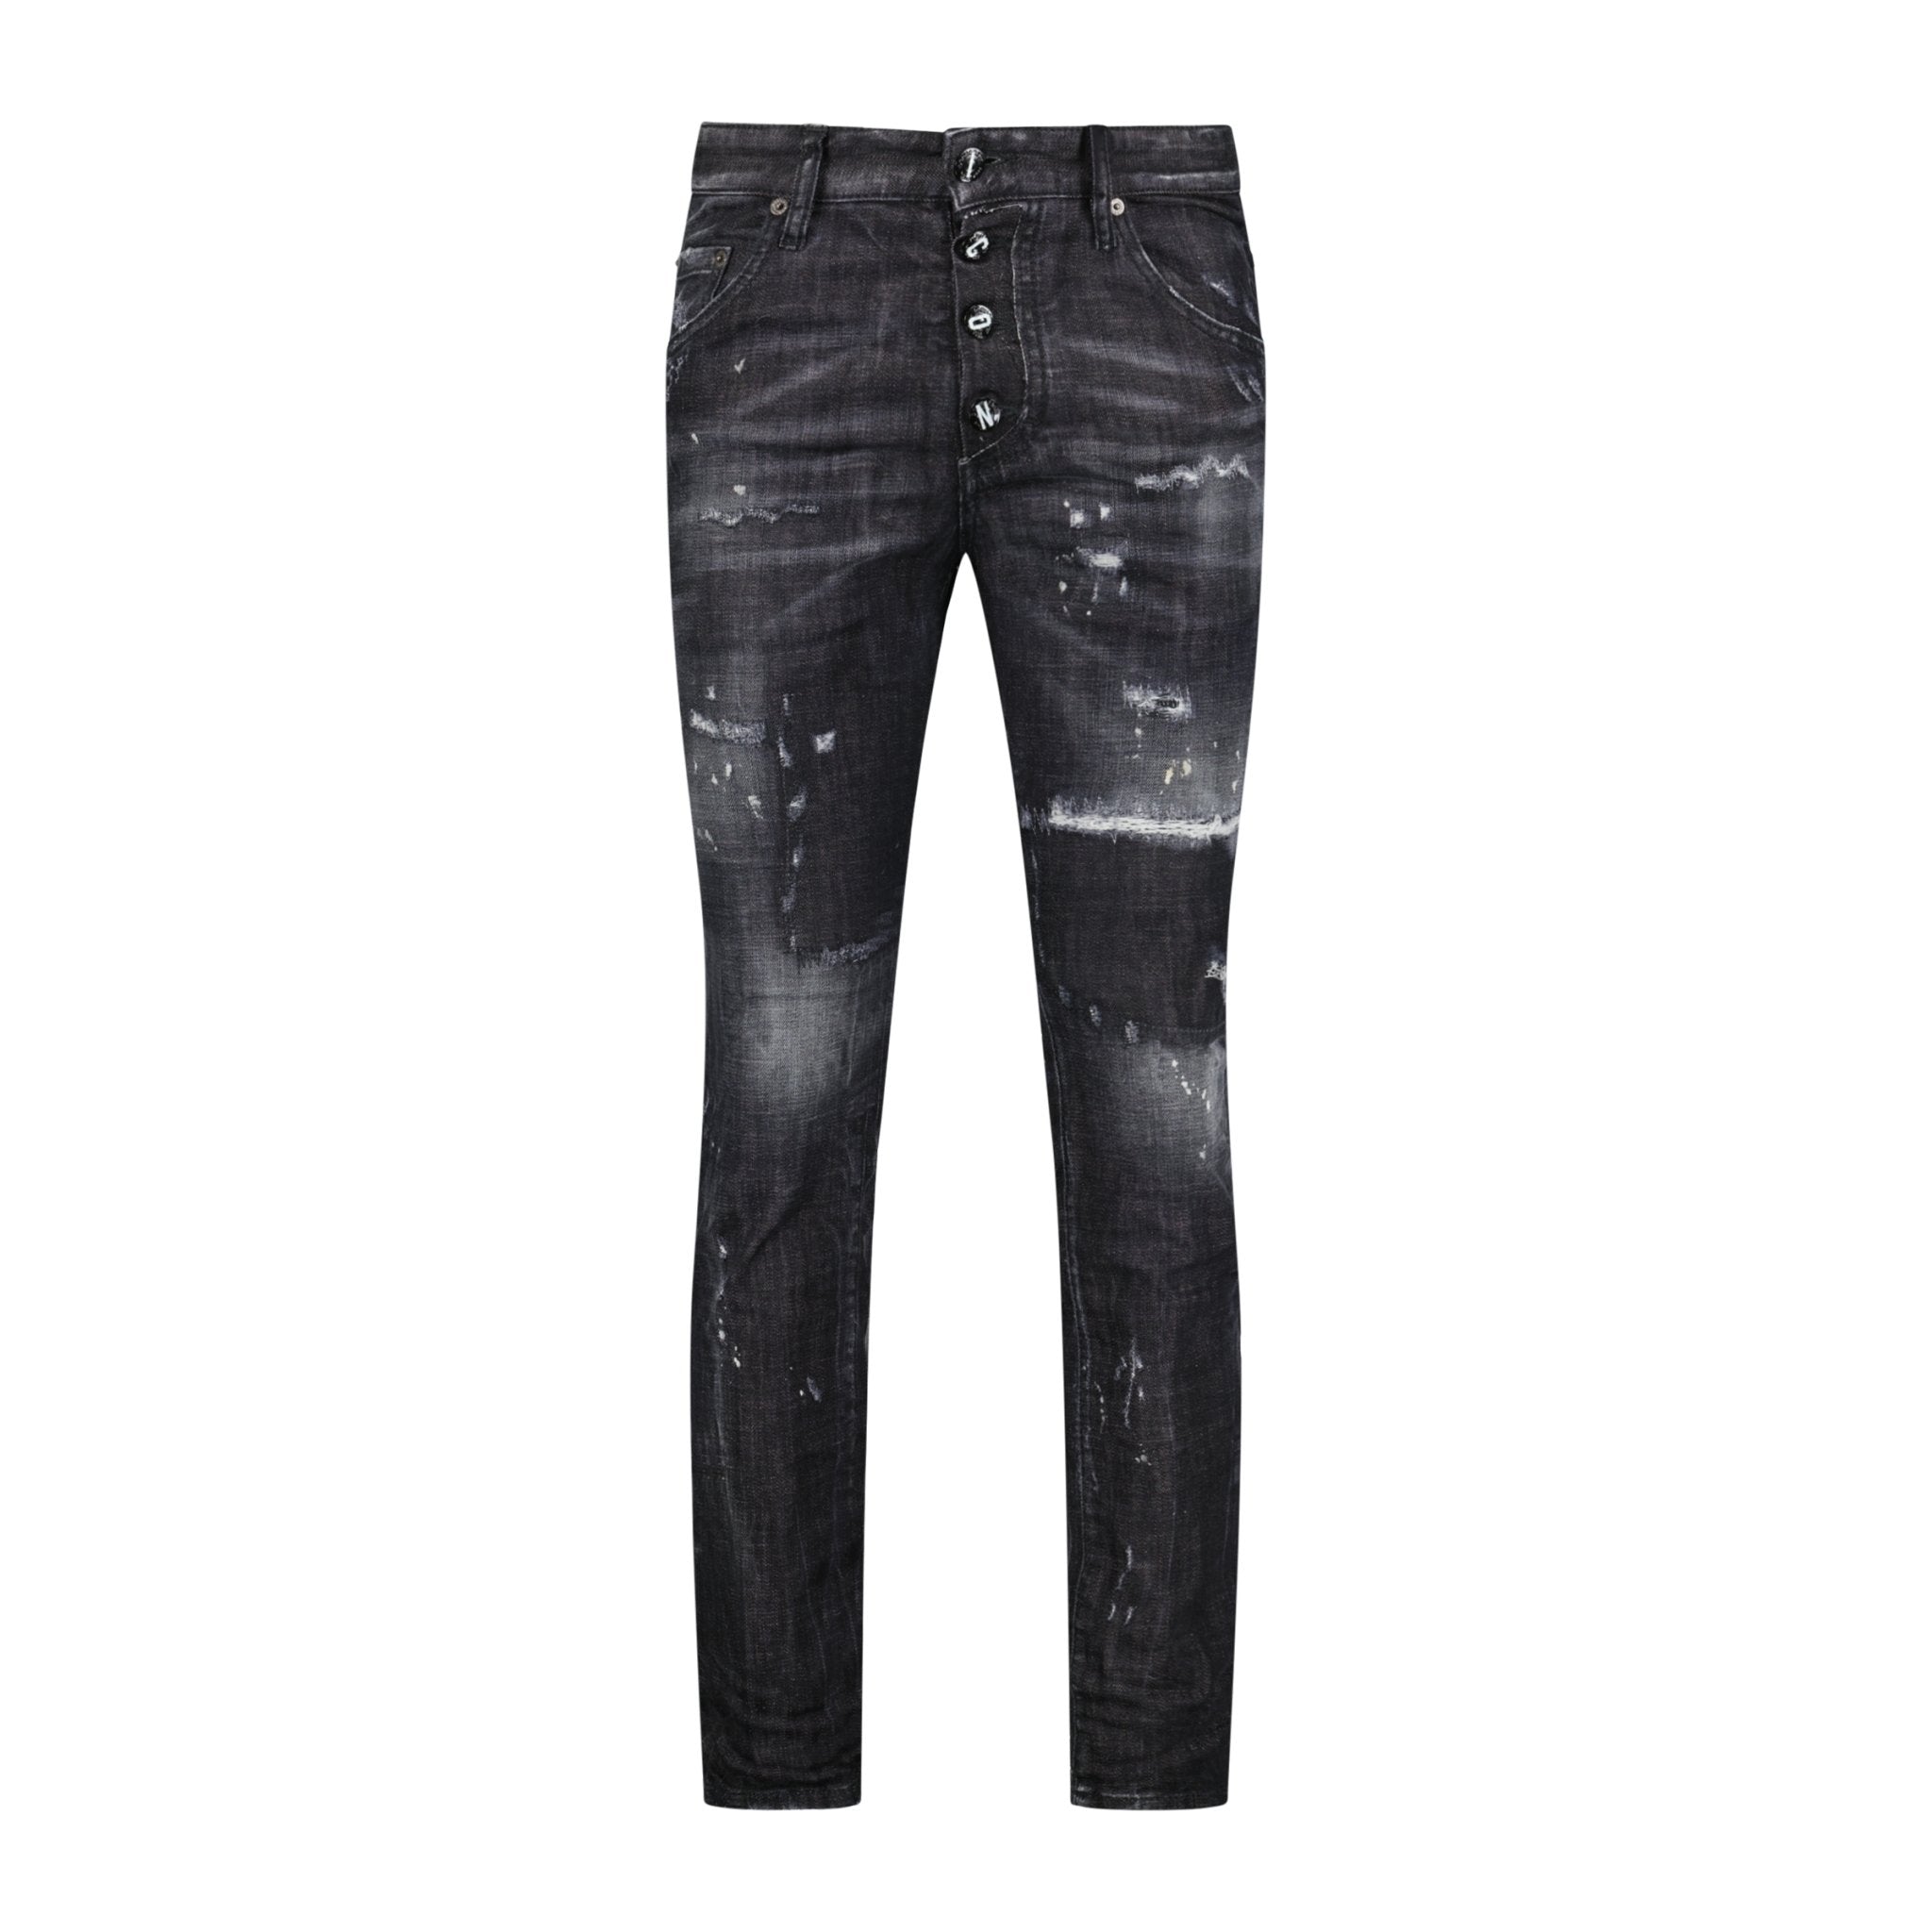 DSquared2 'Skater' Leather Patch Slim Fit Jeans Black